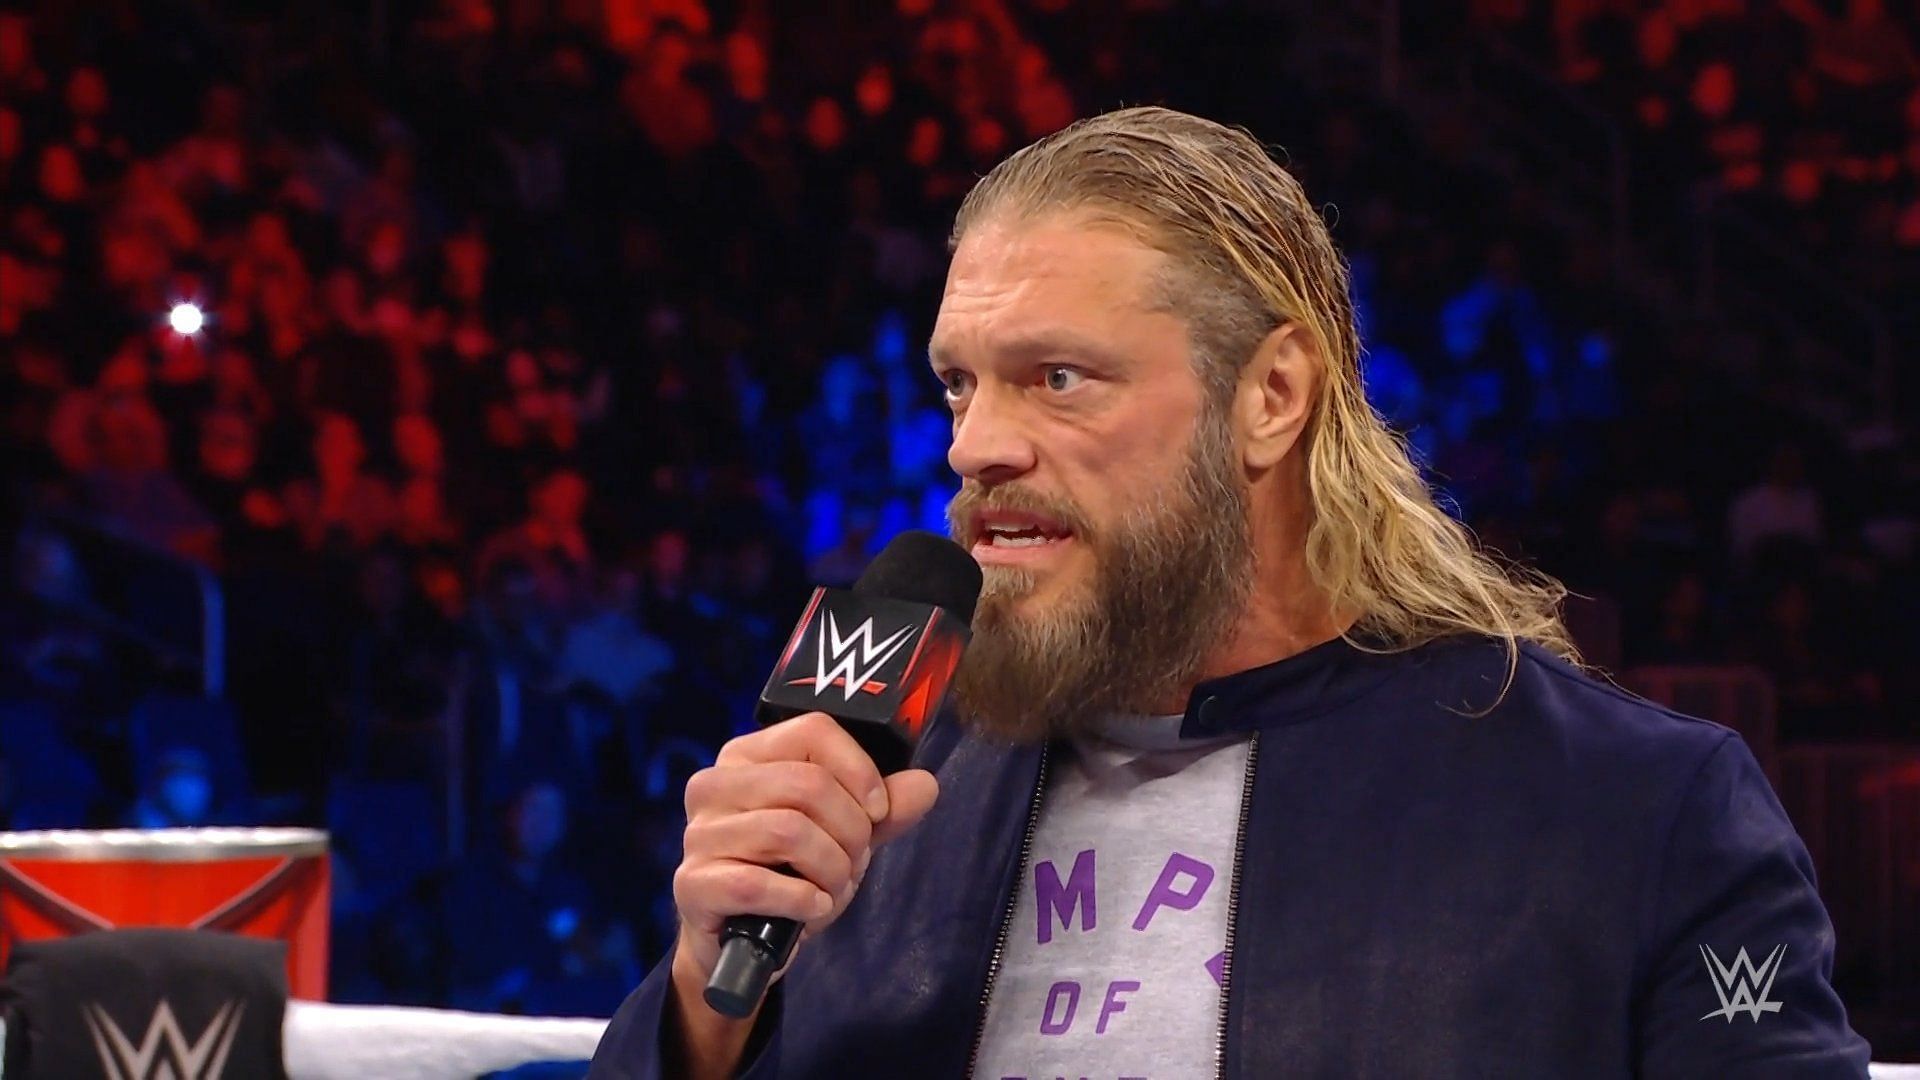 WWE News: Edge takes a shot at AEW during segment on RAW